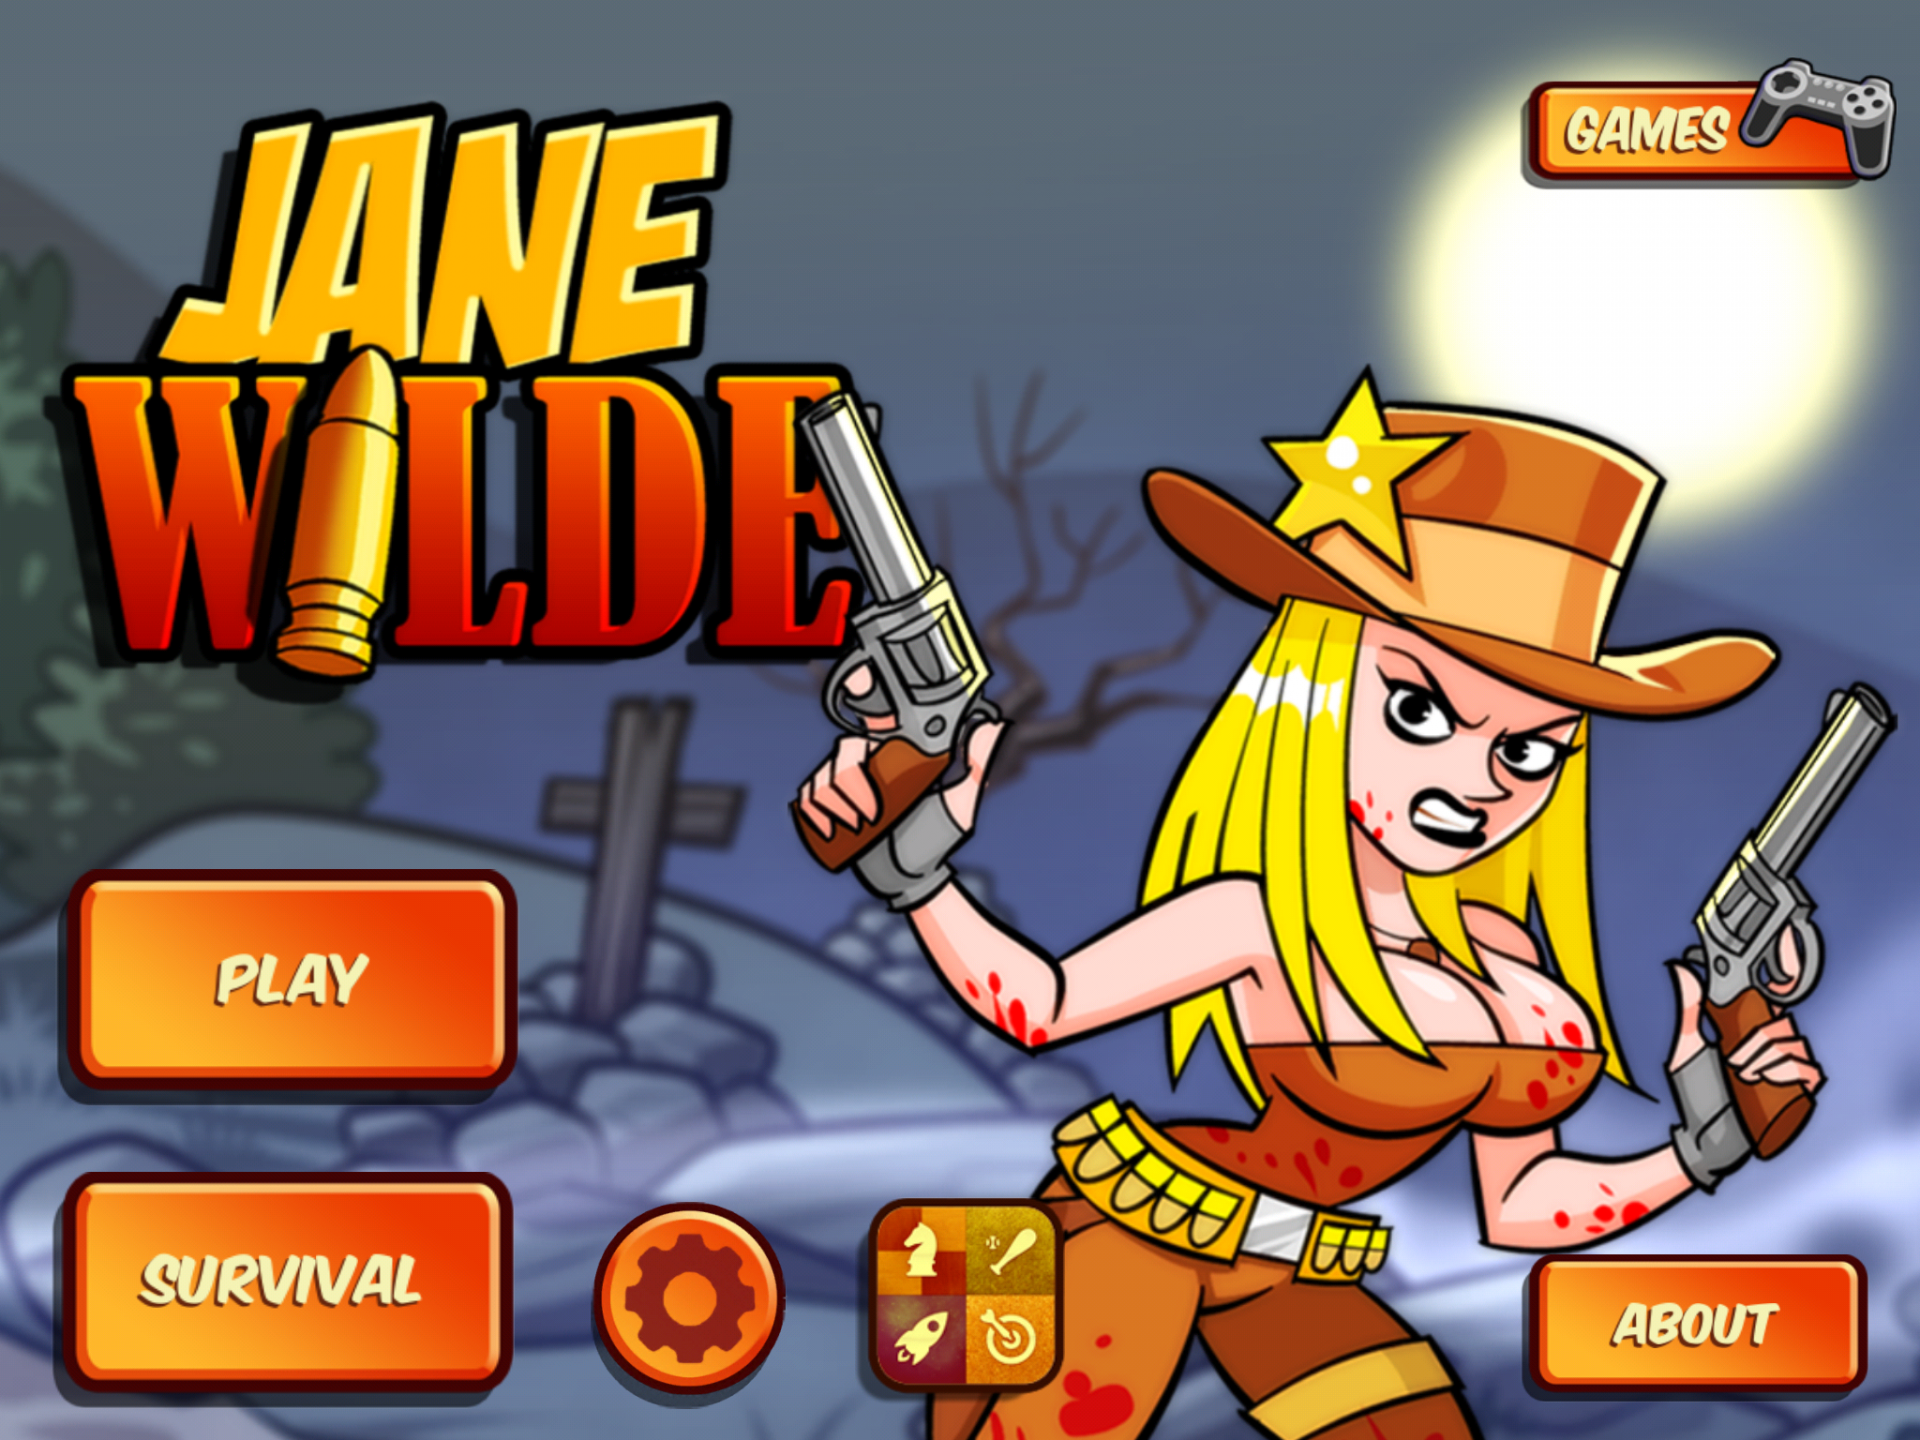 Джейн Уайльд игра. Wild Side игра. Джейн Уайлд игра стрелялка. Вайлд игра на телефоне.